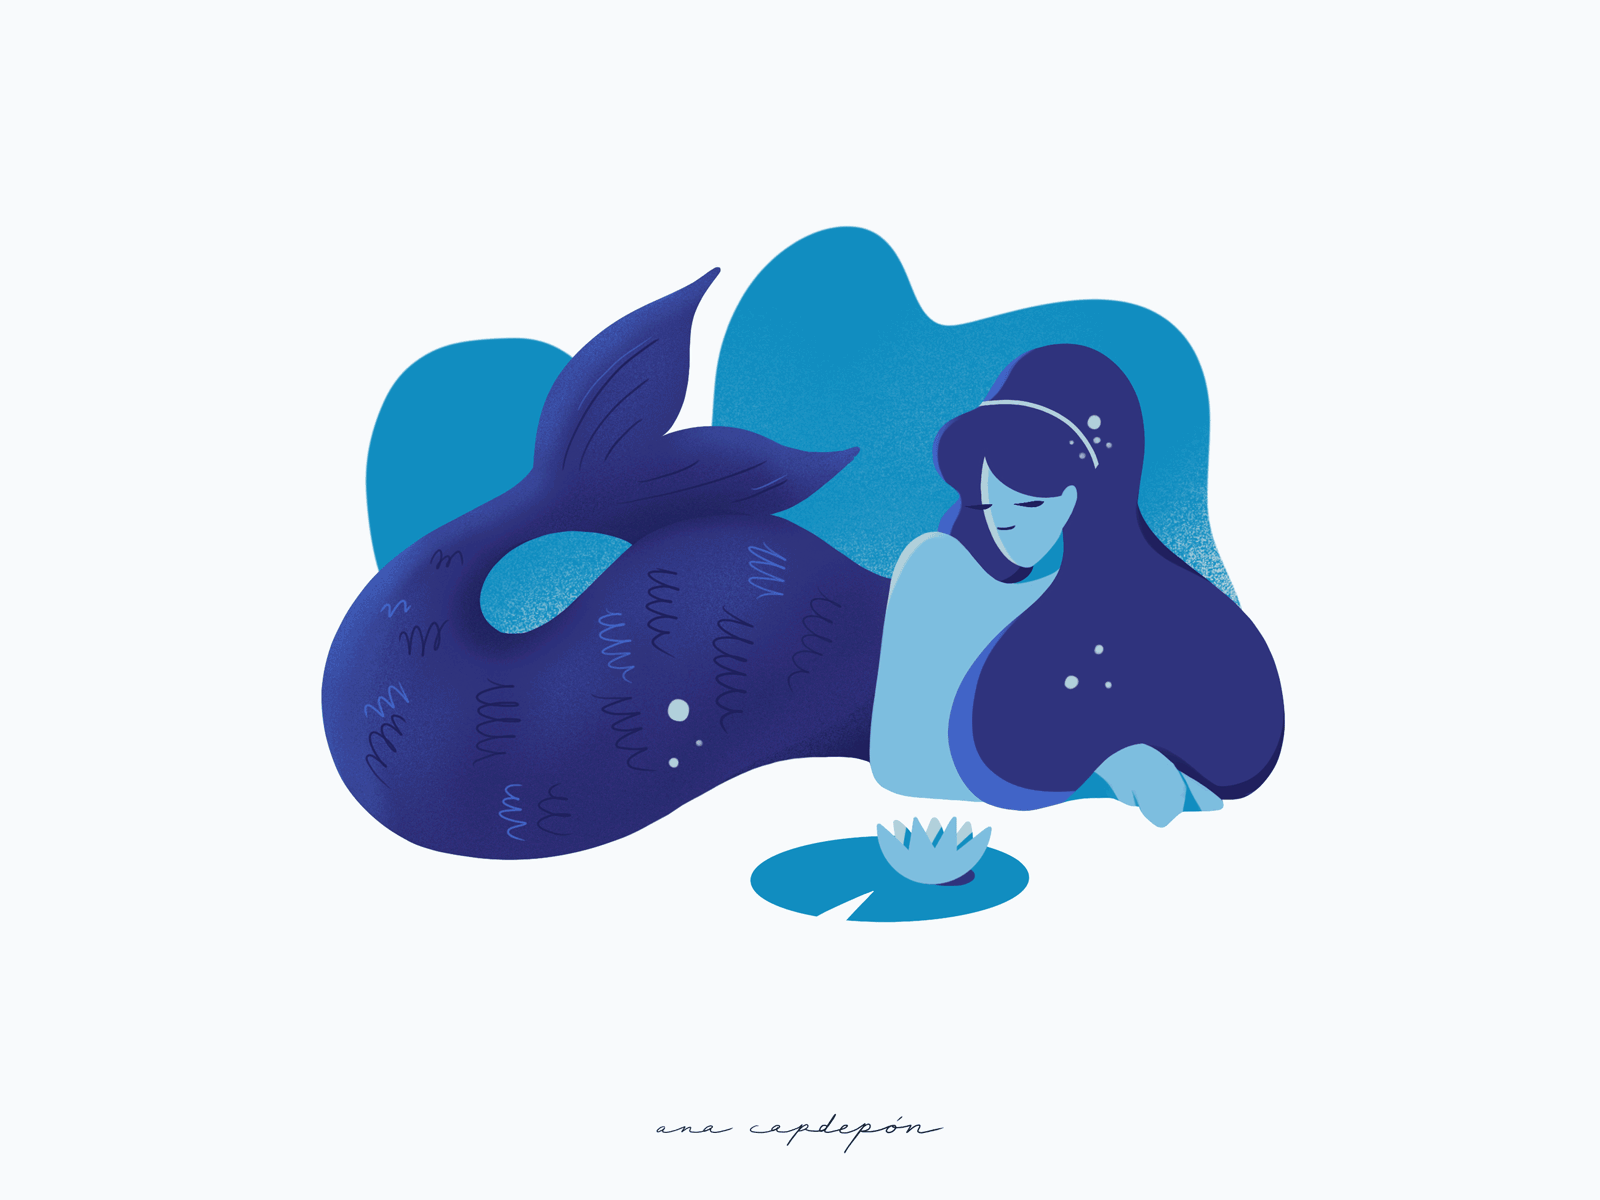 blue mermaid by ana capdep n on dribbble blue mermaid small